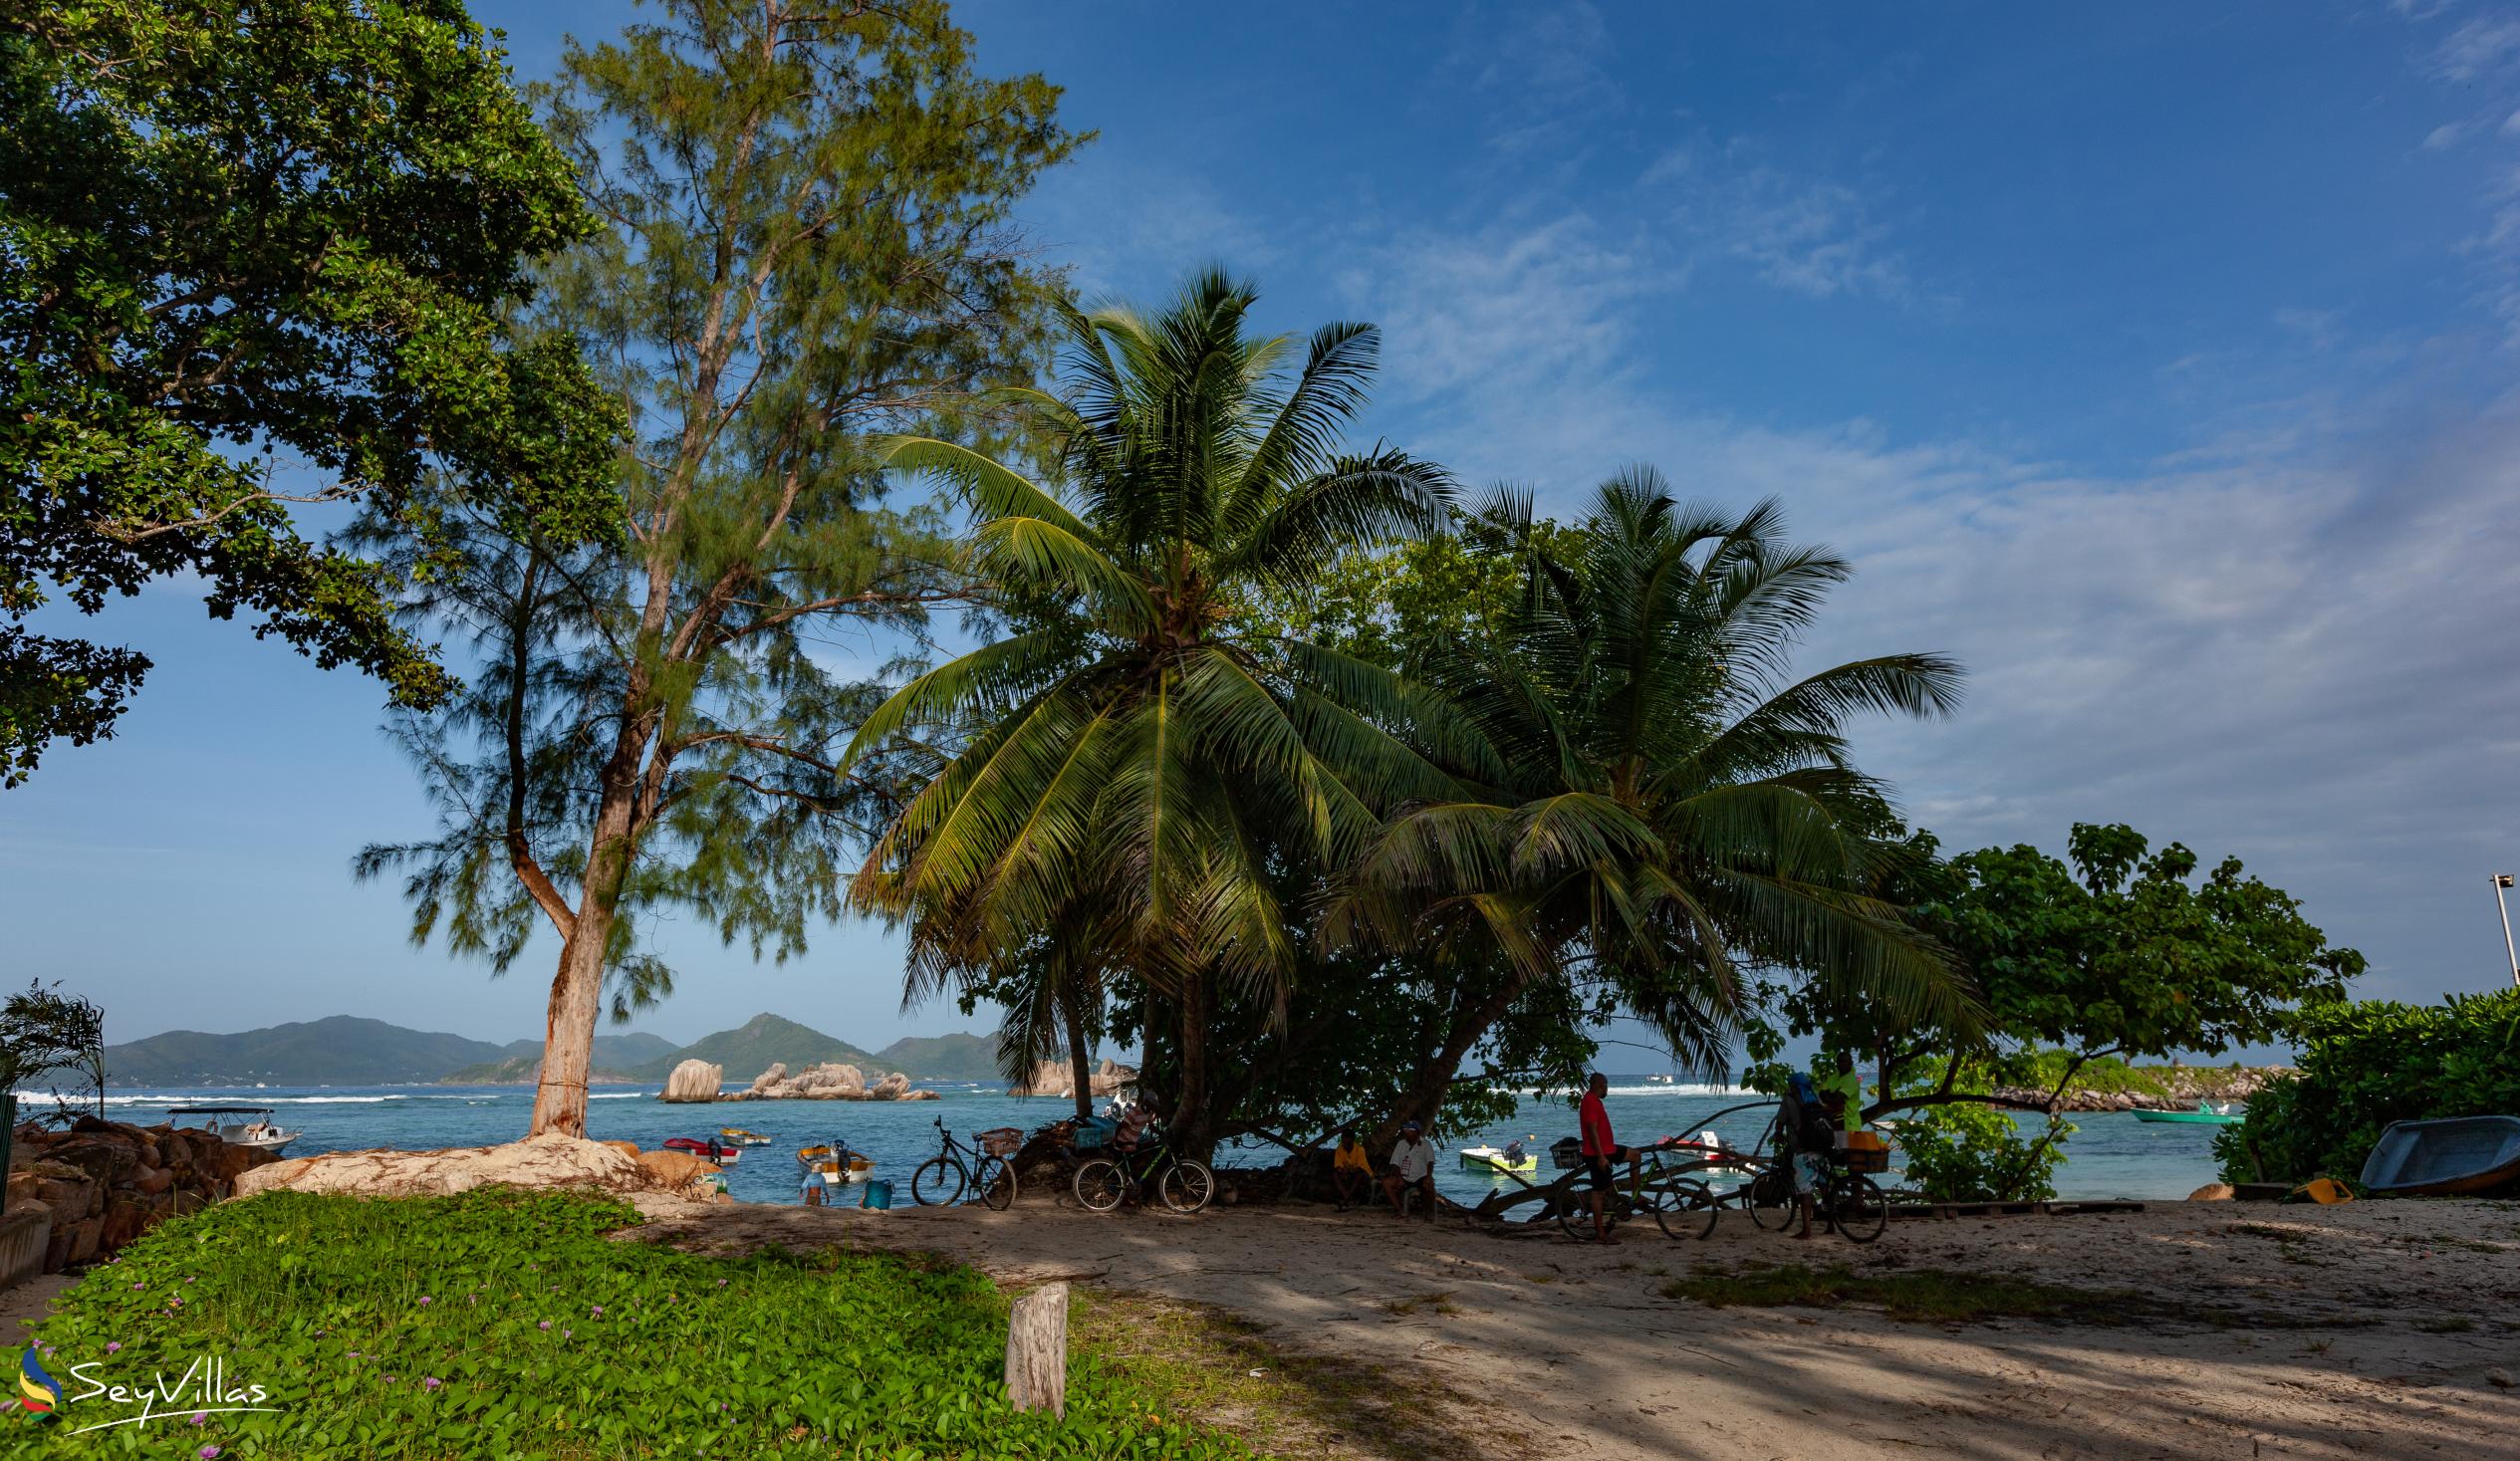 Foto 15: Pension Hibiscus - Posizione - La Digue (Seychelles)